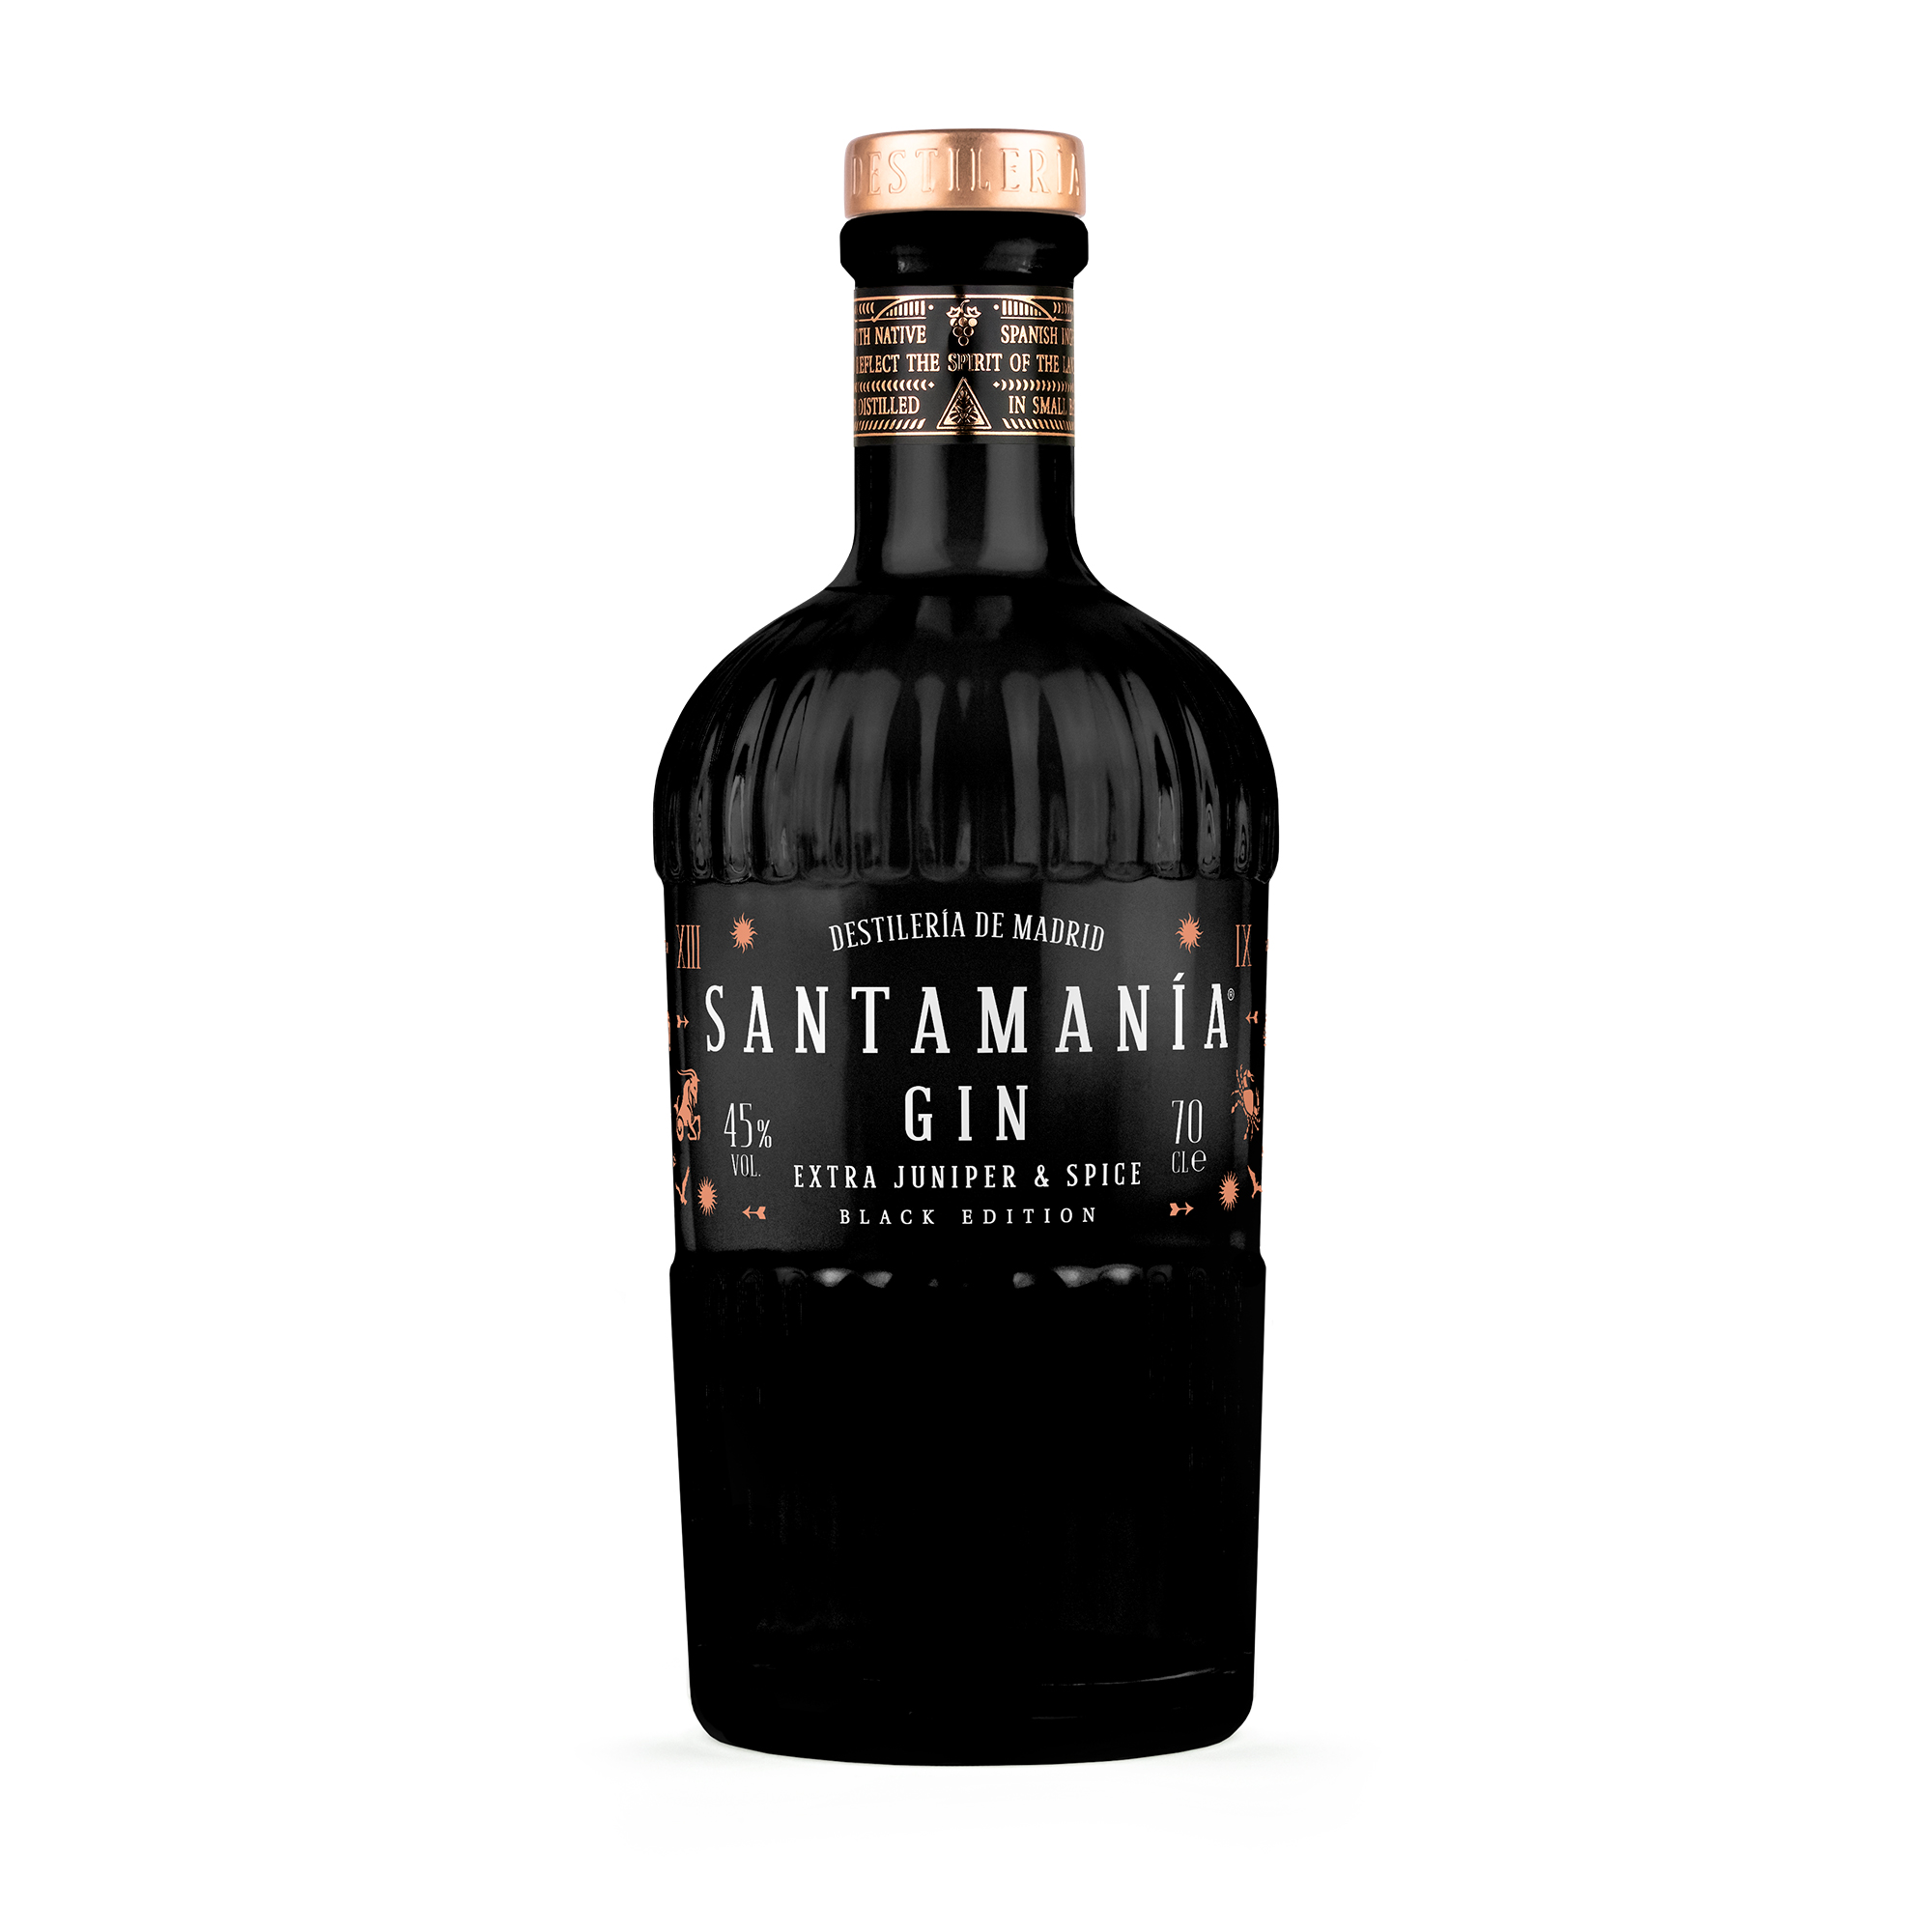 SANTAMANIA BLACK EDITION GIN